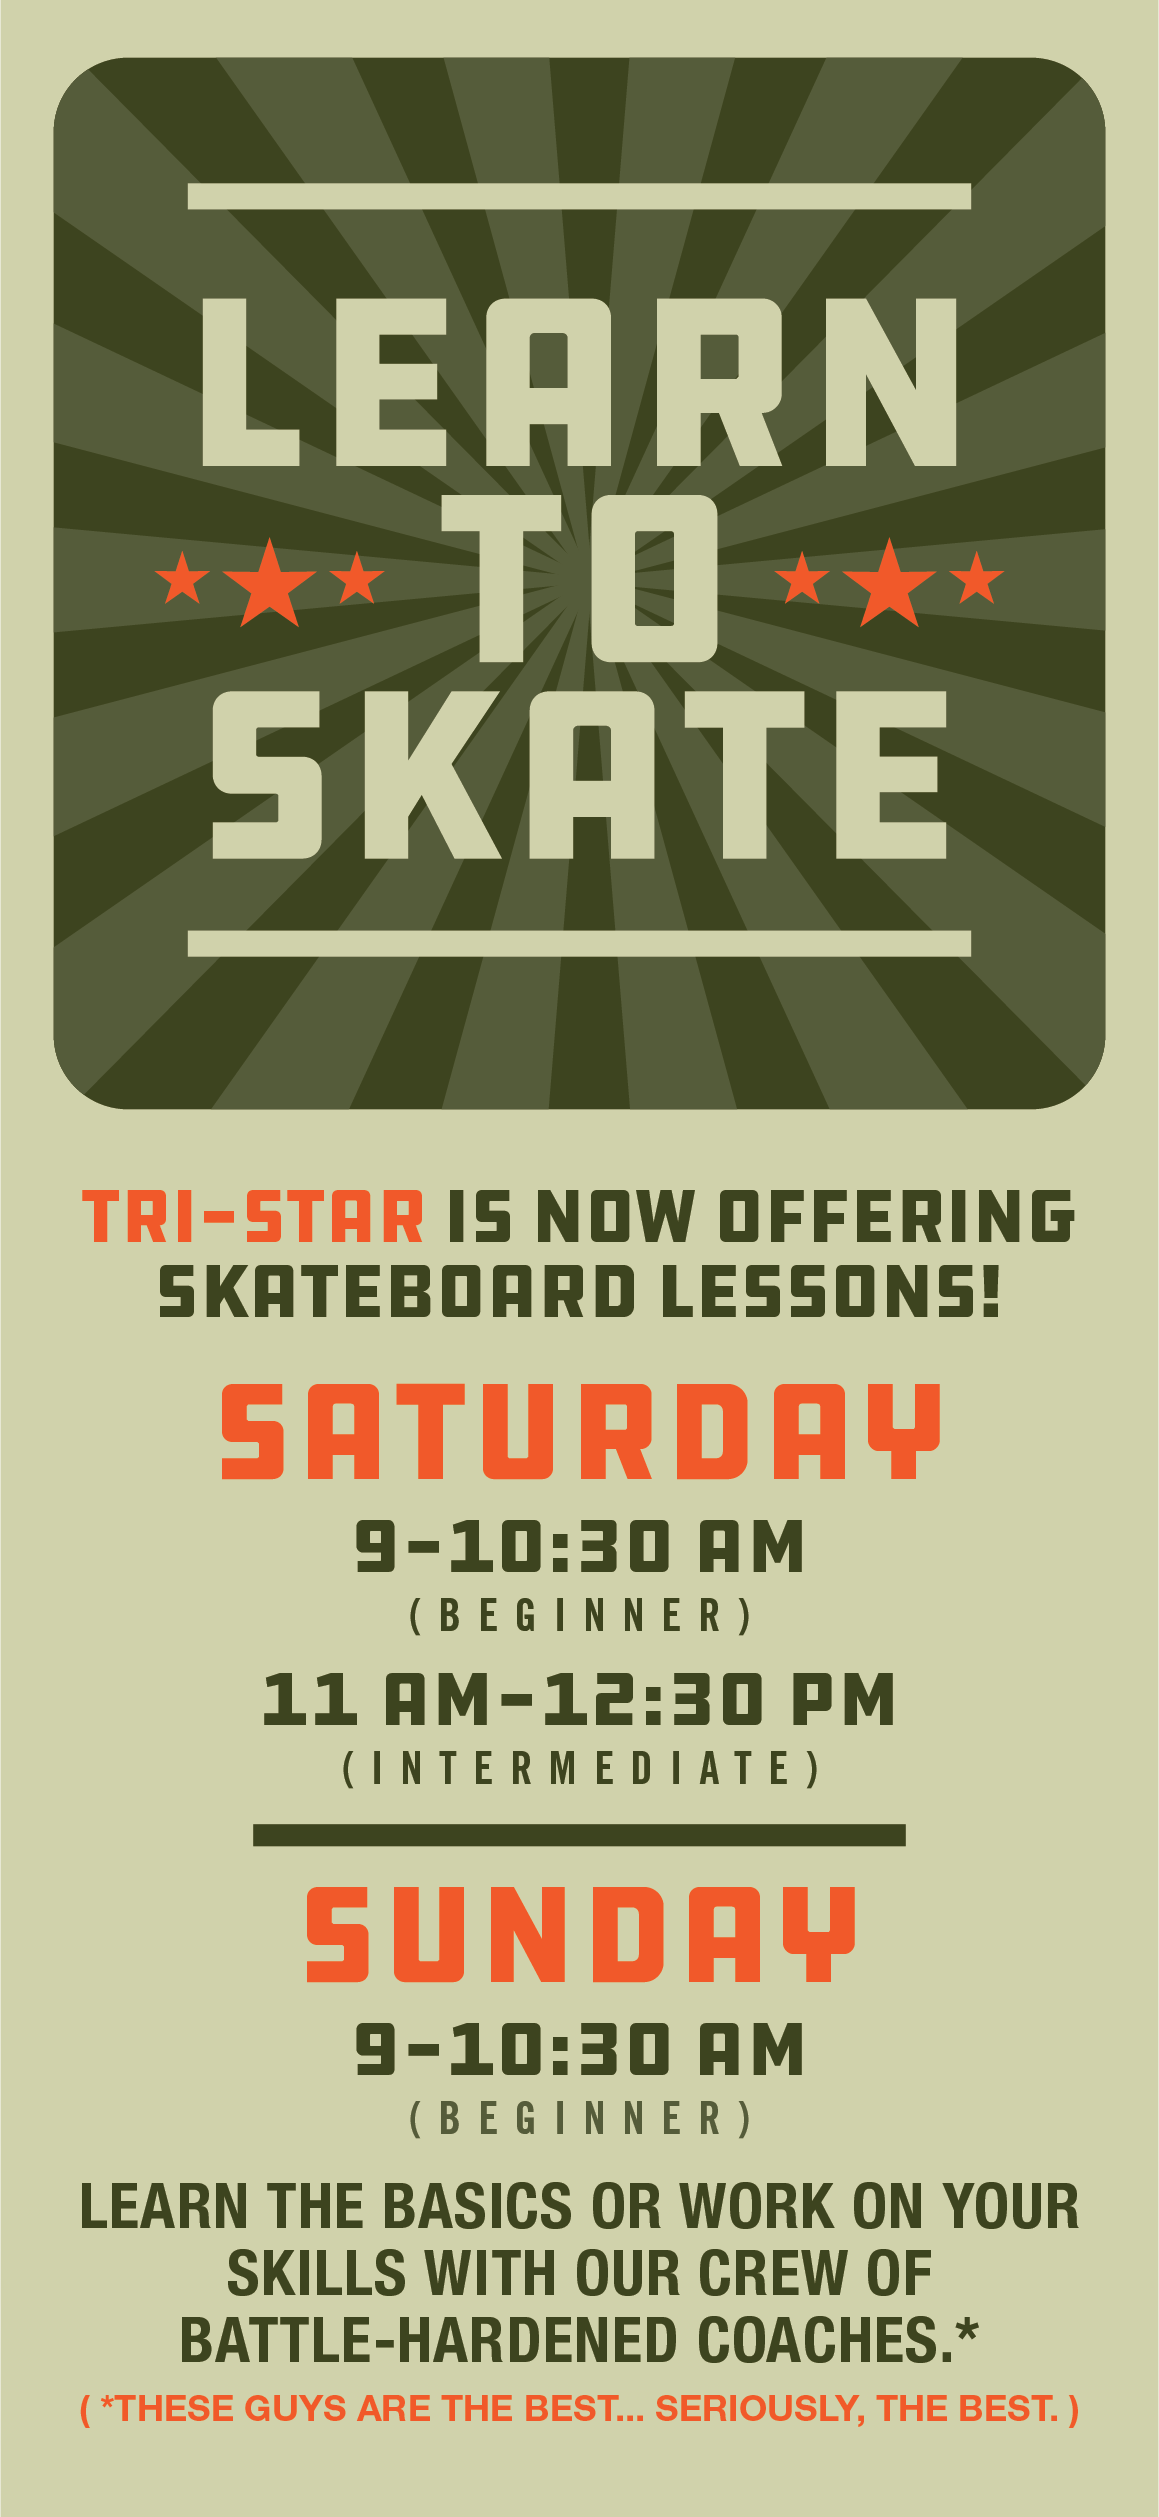 Flyer for skateboard lessons in Cleveland Ohio at Tri Star Skatepark